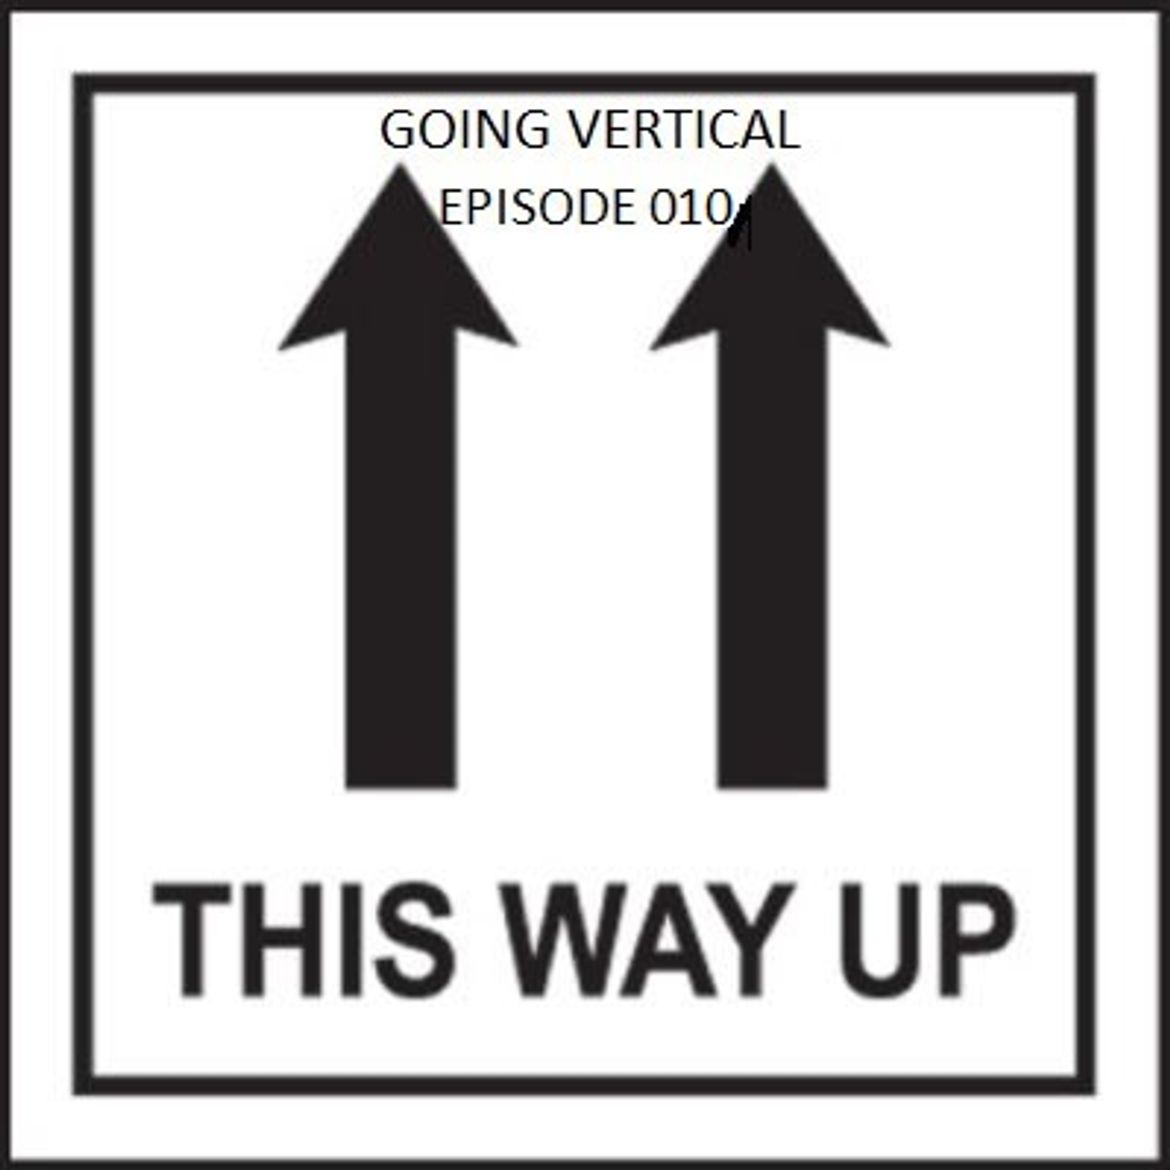 Why this way. This way. Way up. Way up лого. This way up знак.